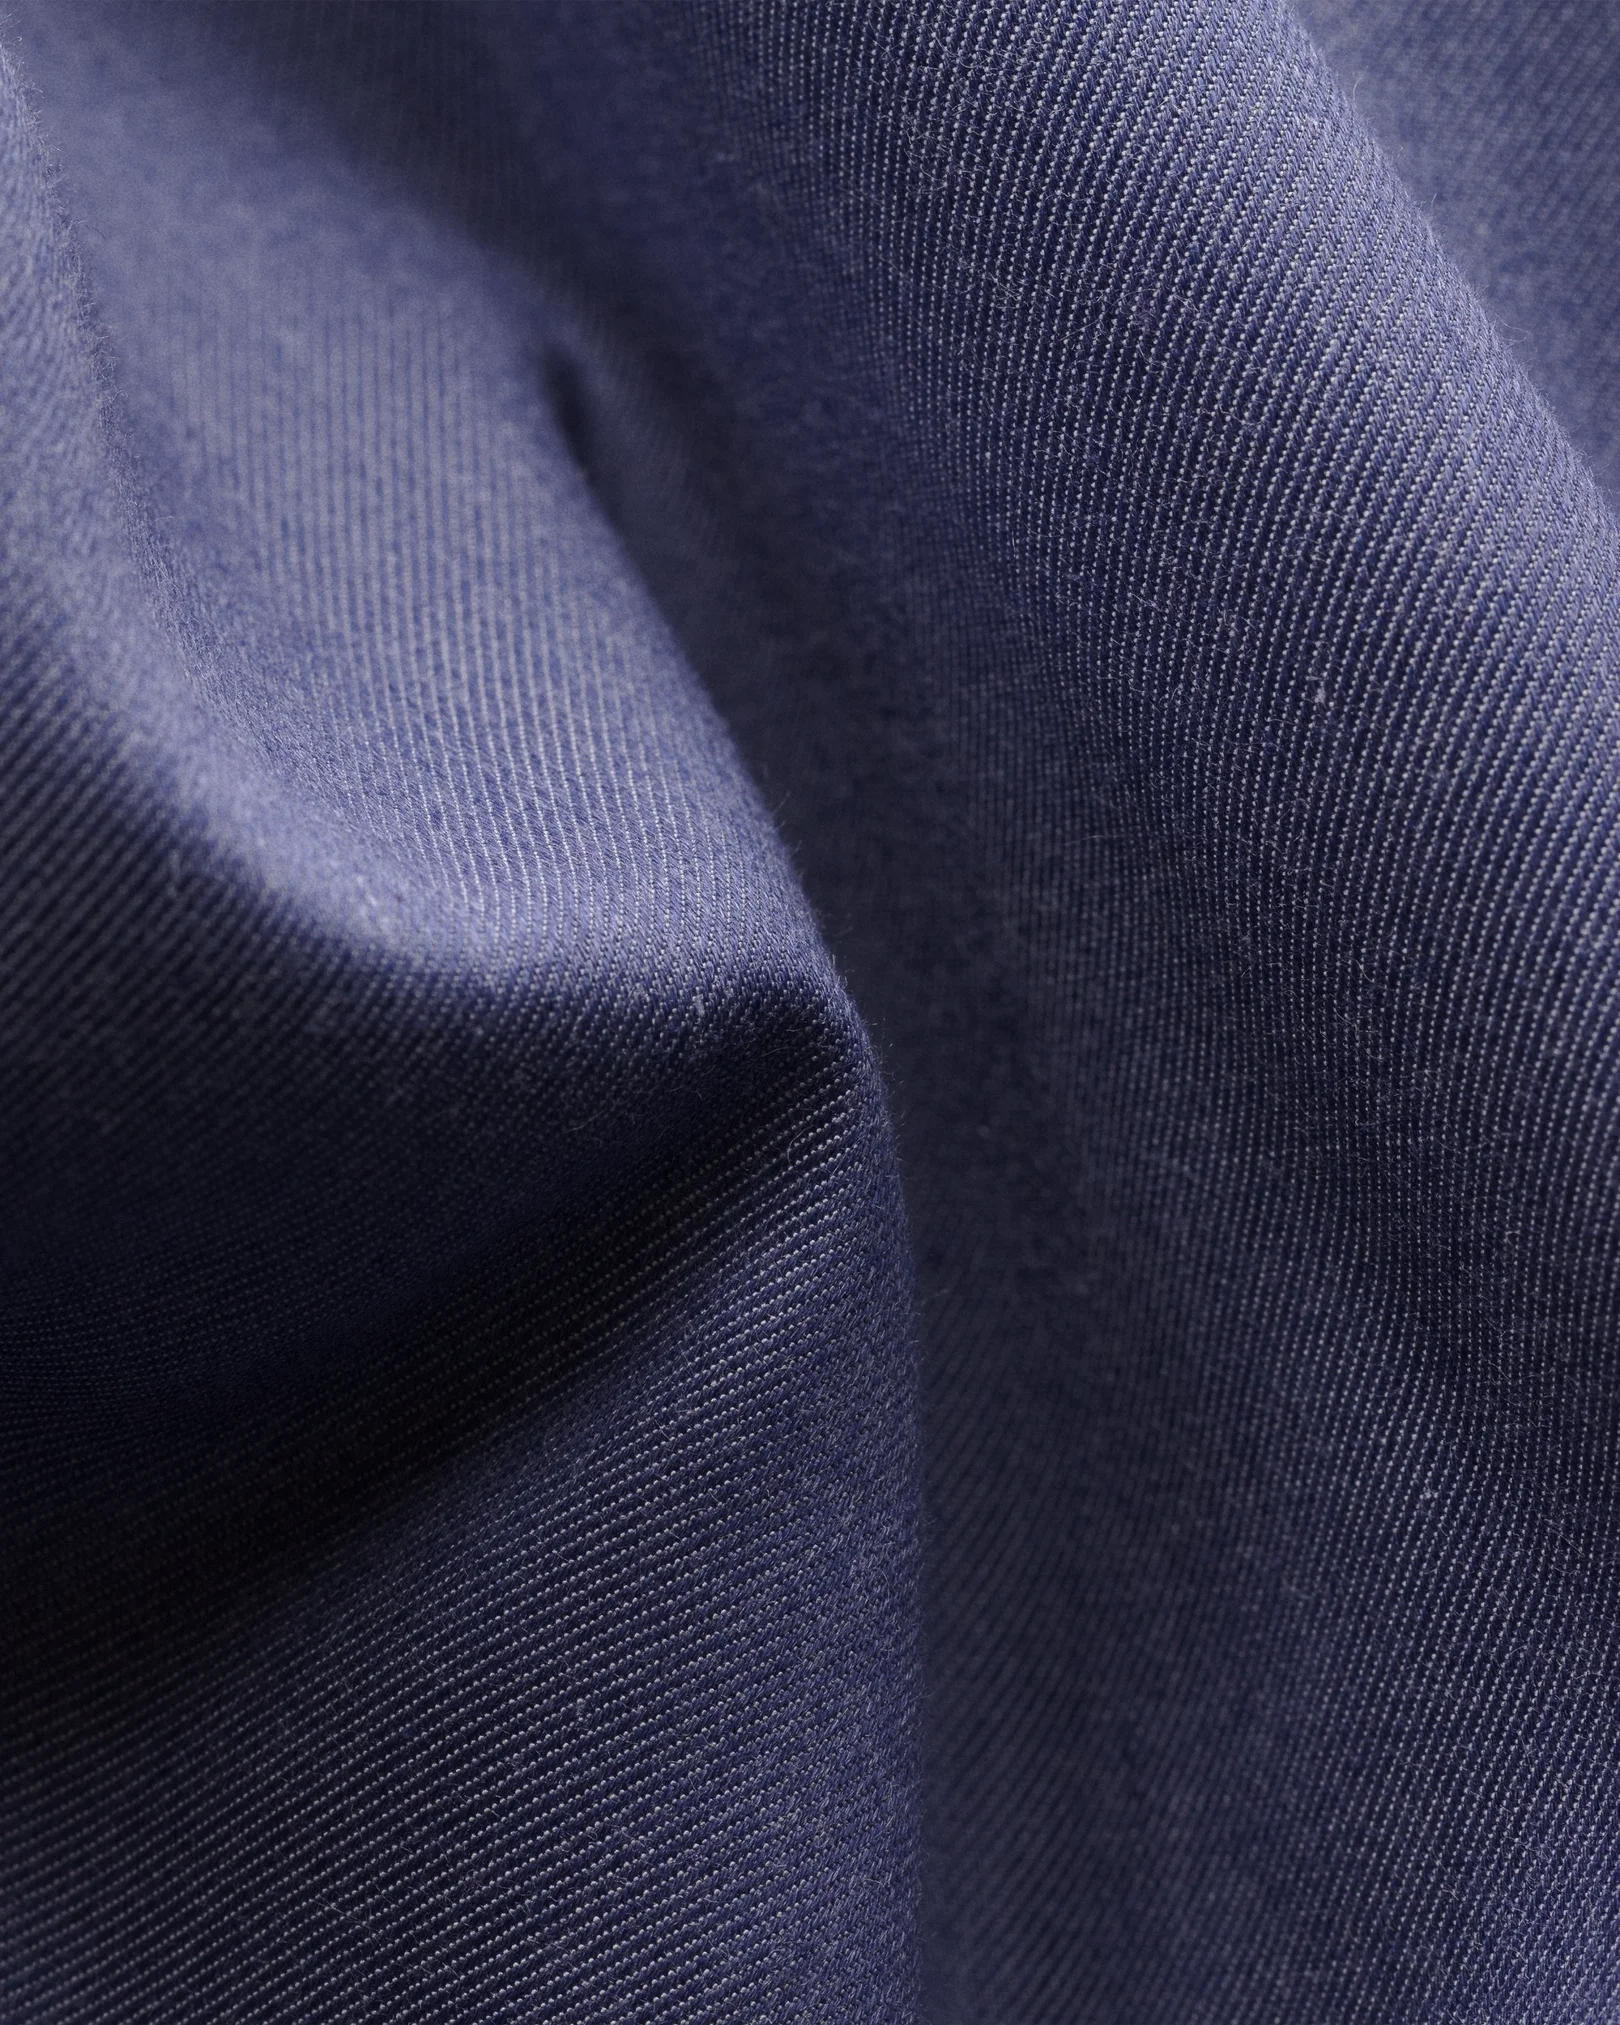 Eton - indigo effect cotton tencel shirt